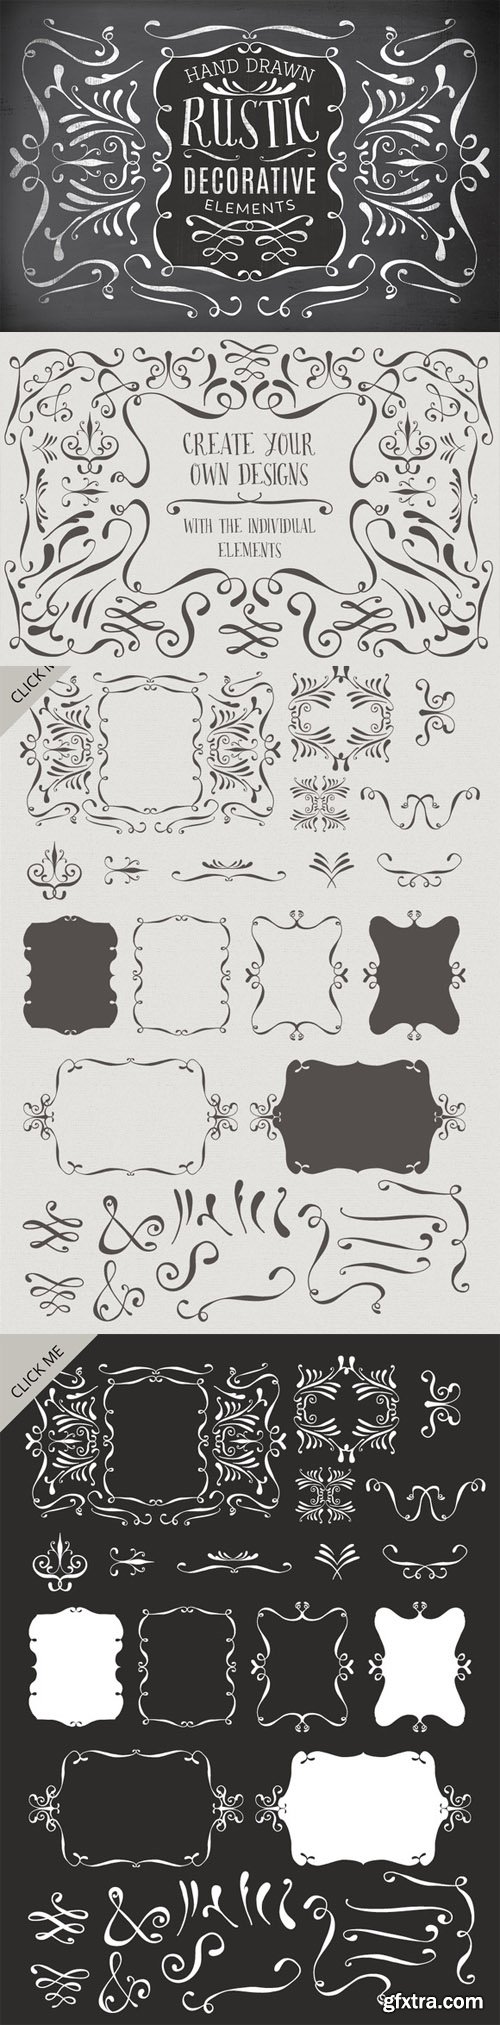 Hand drawn decorative elements - Creativemarket 59889